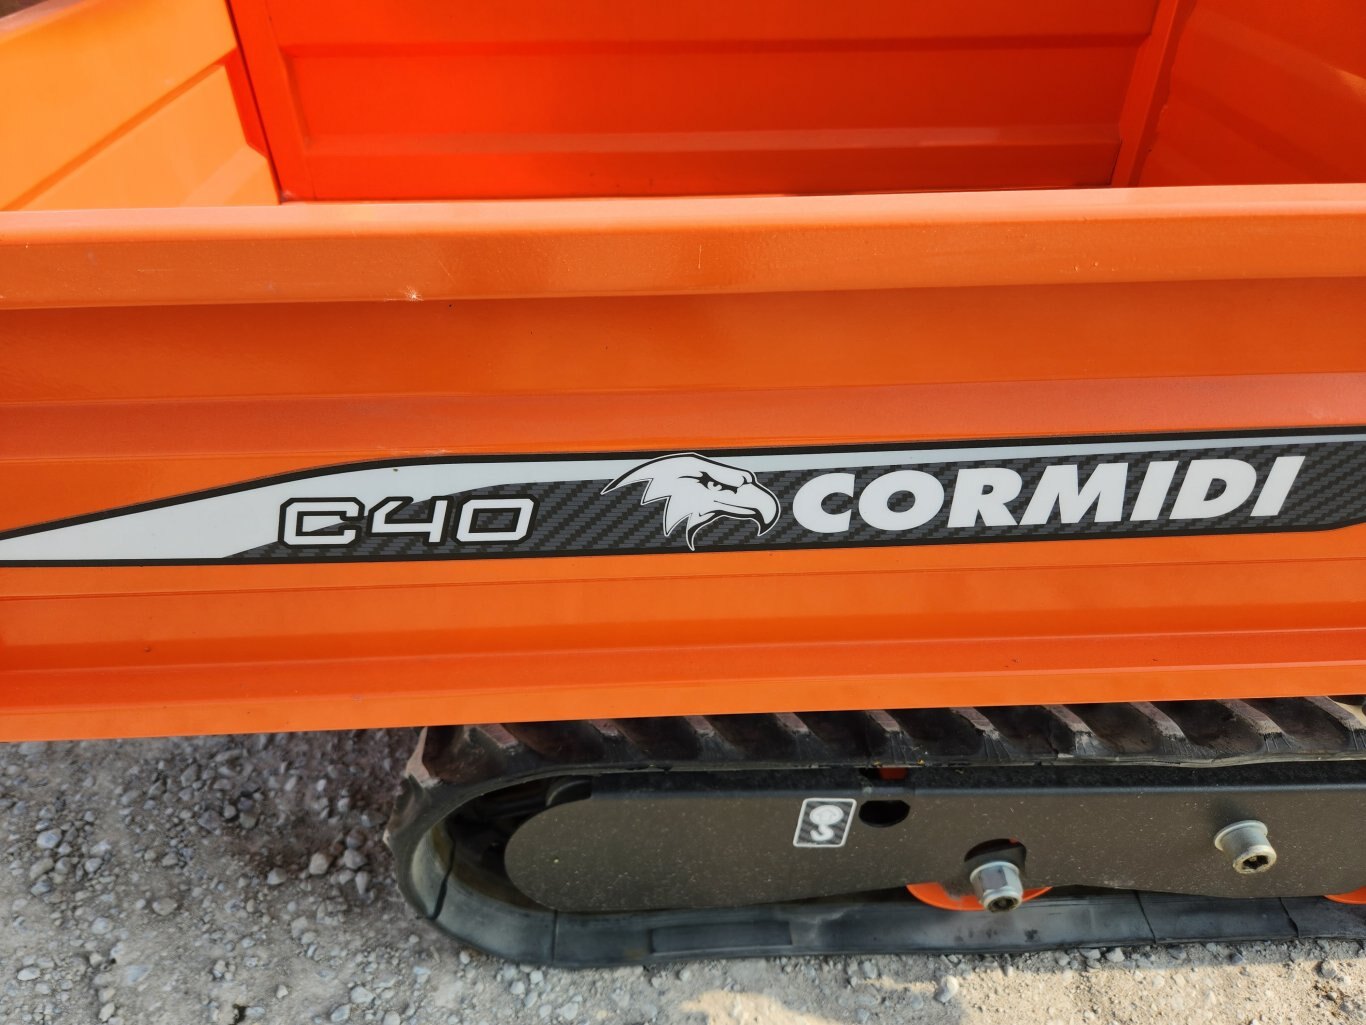 BRAND NEW Cormidi C40 tracked dumper